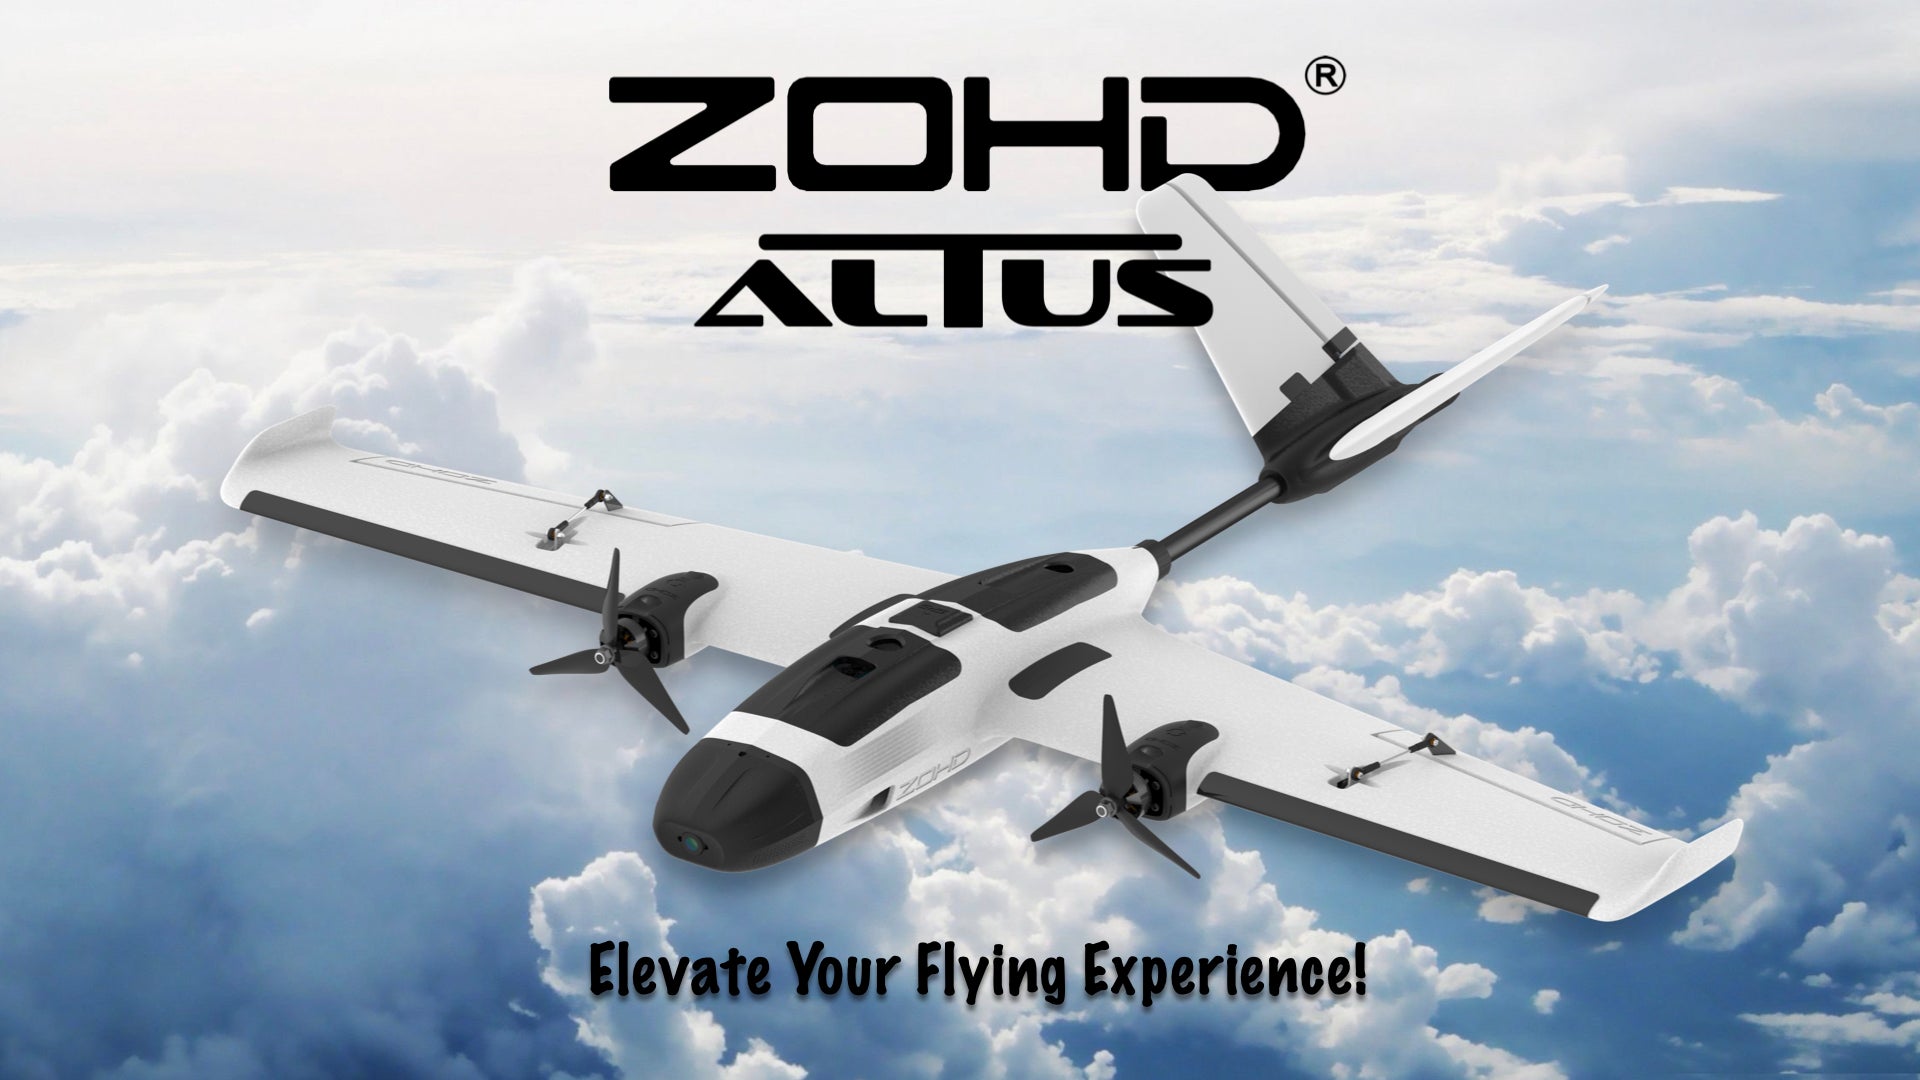 ZOHD Altus Twin Motor 980mm FPV Plane